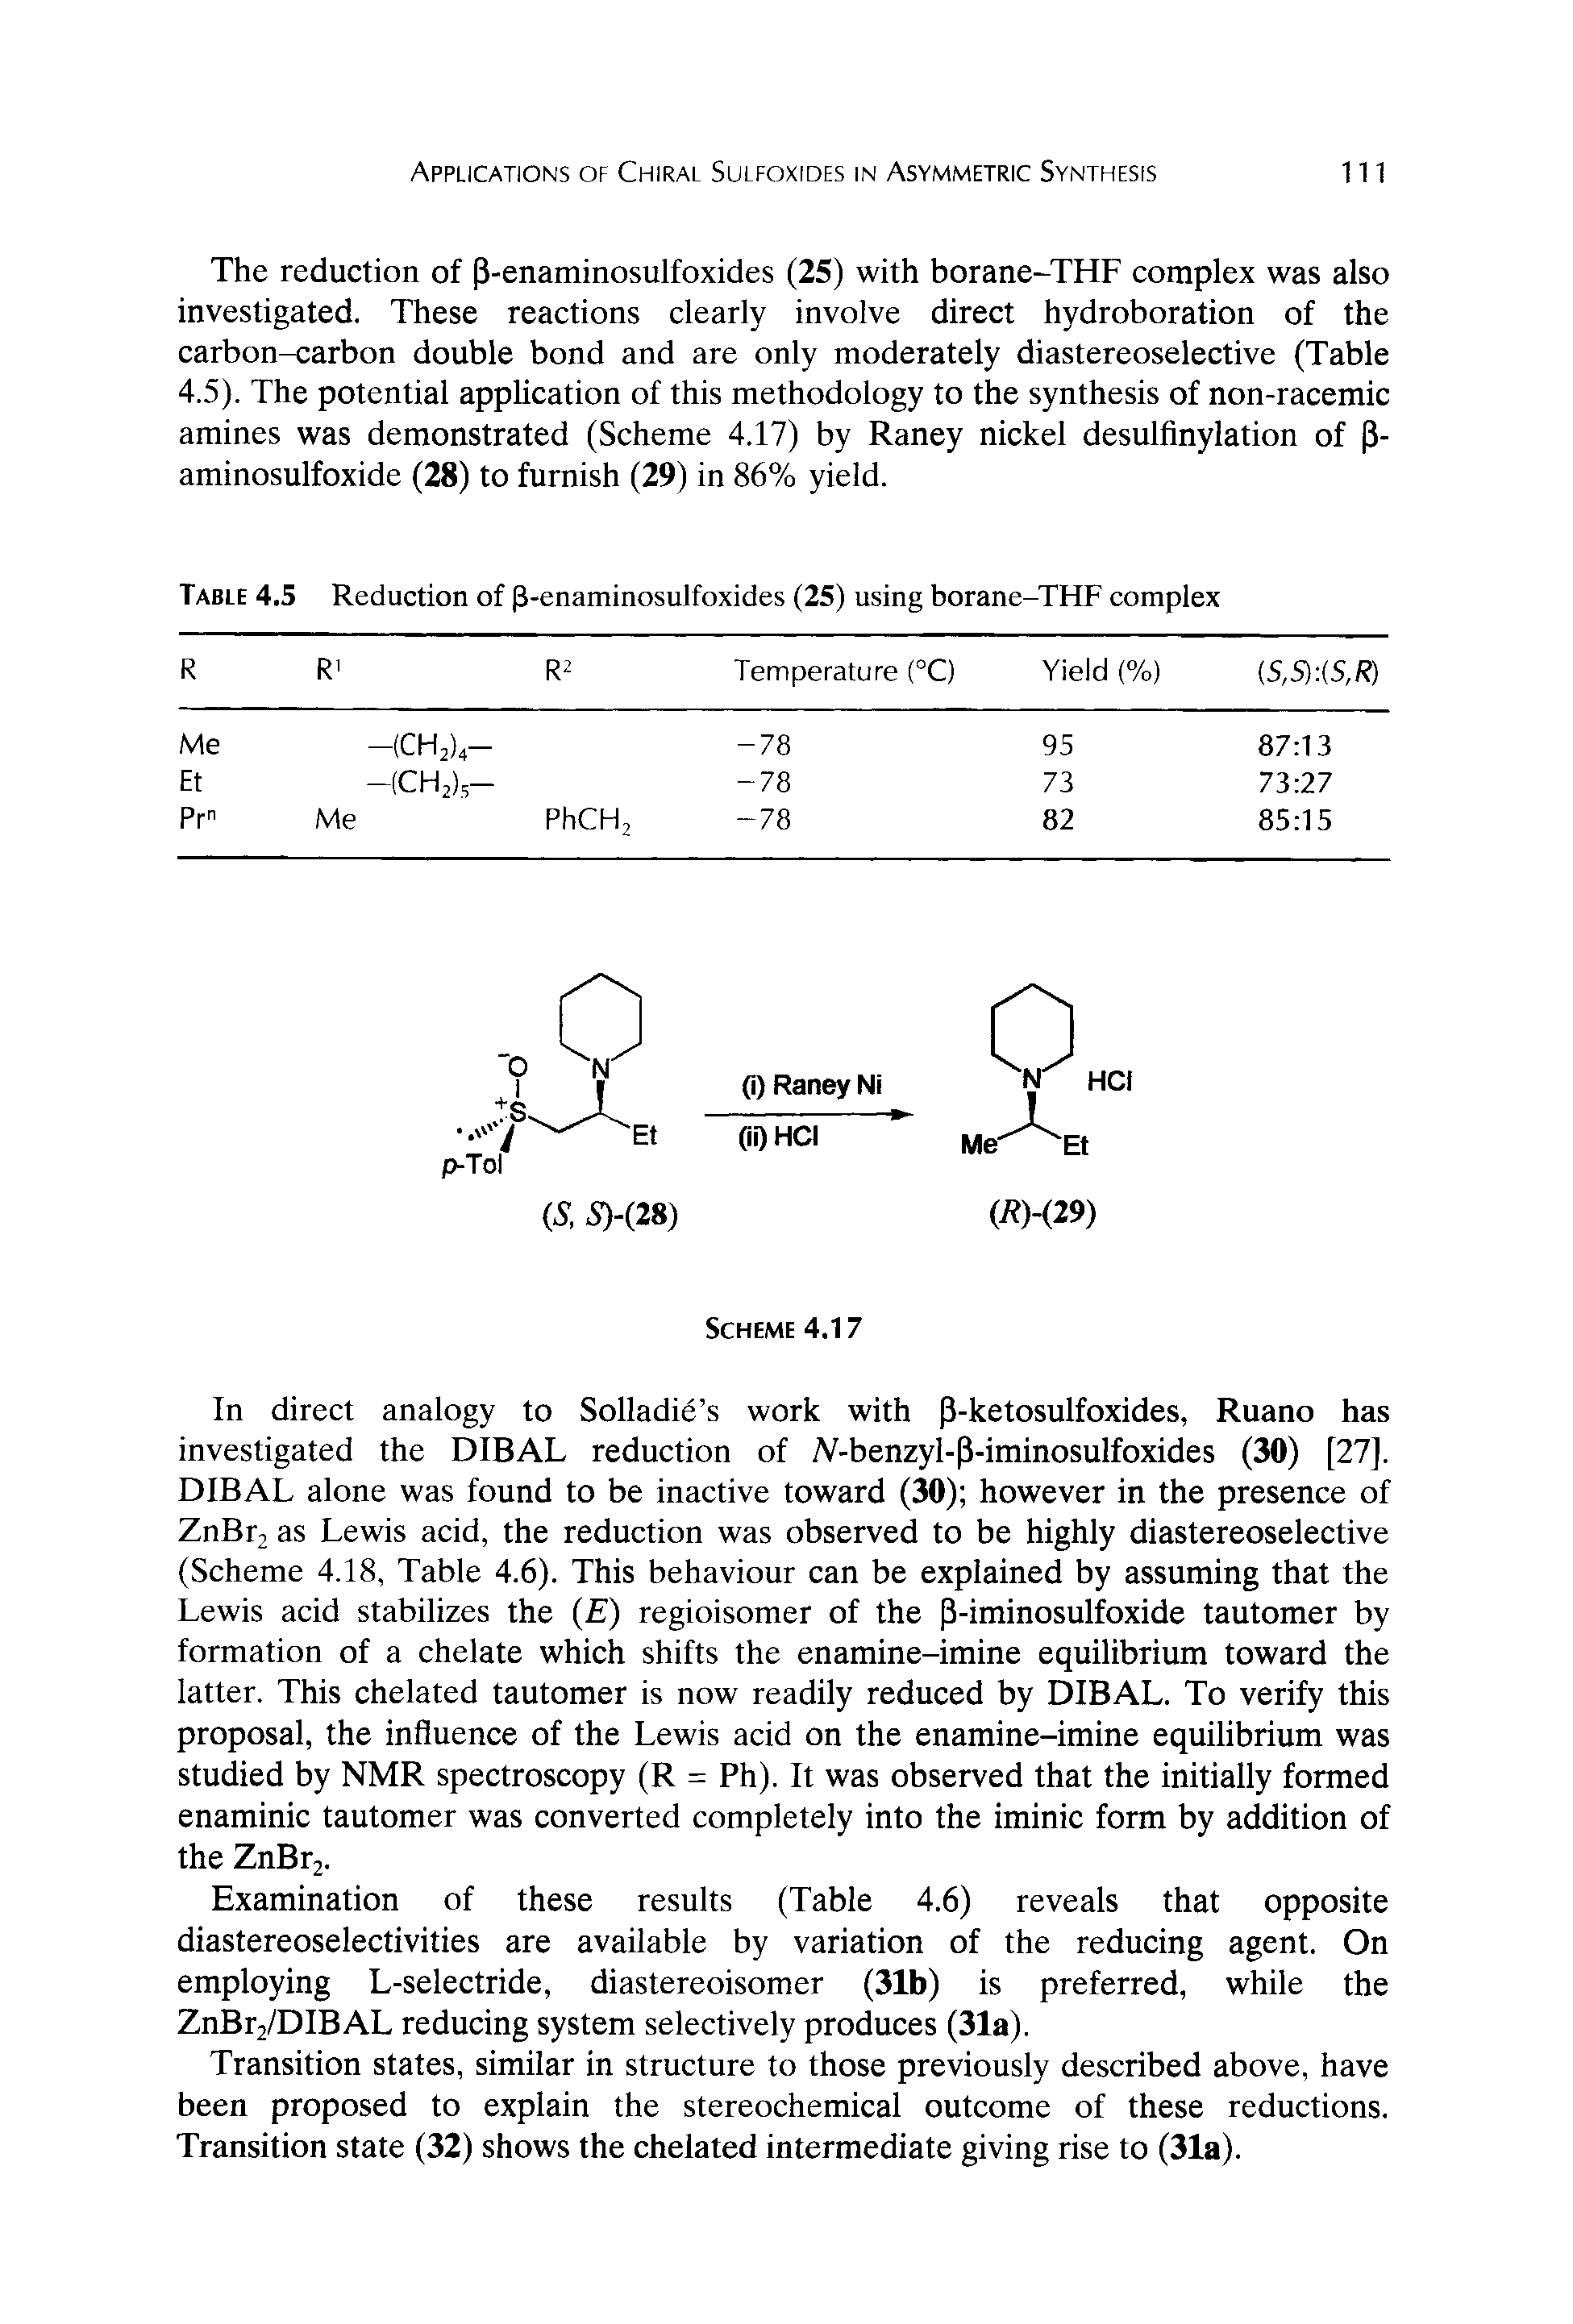 Table 4.5 Reduction of p-enaminosulfoxides (25) using borane-THF complex...